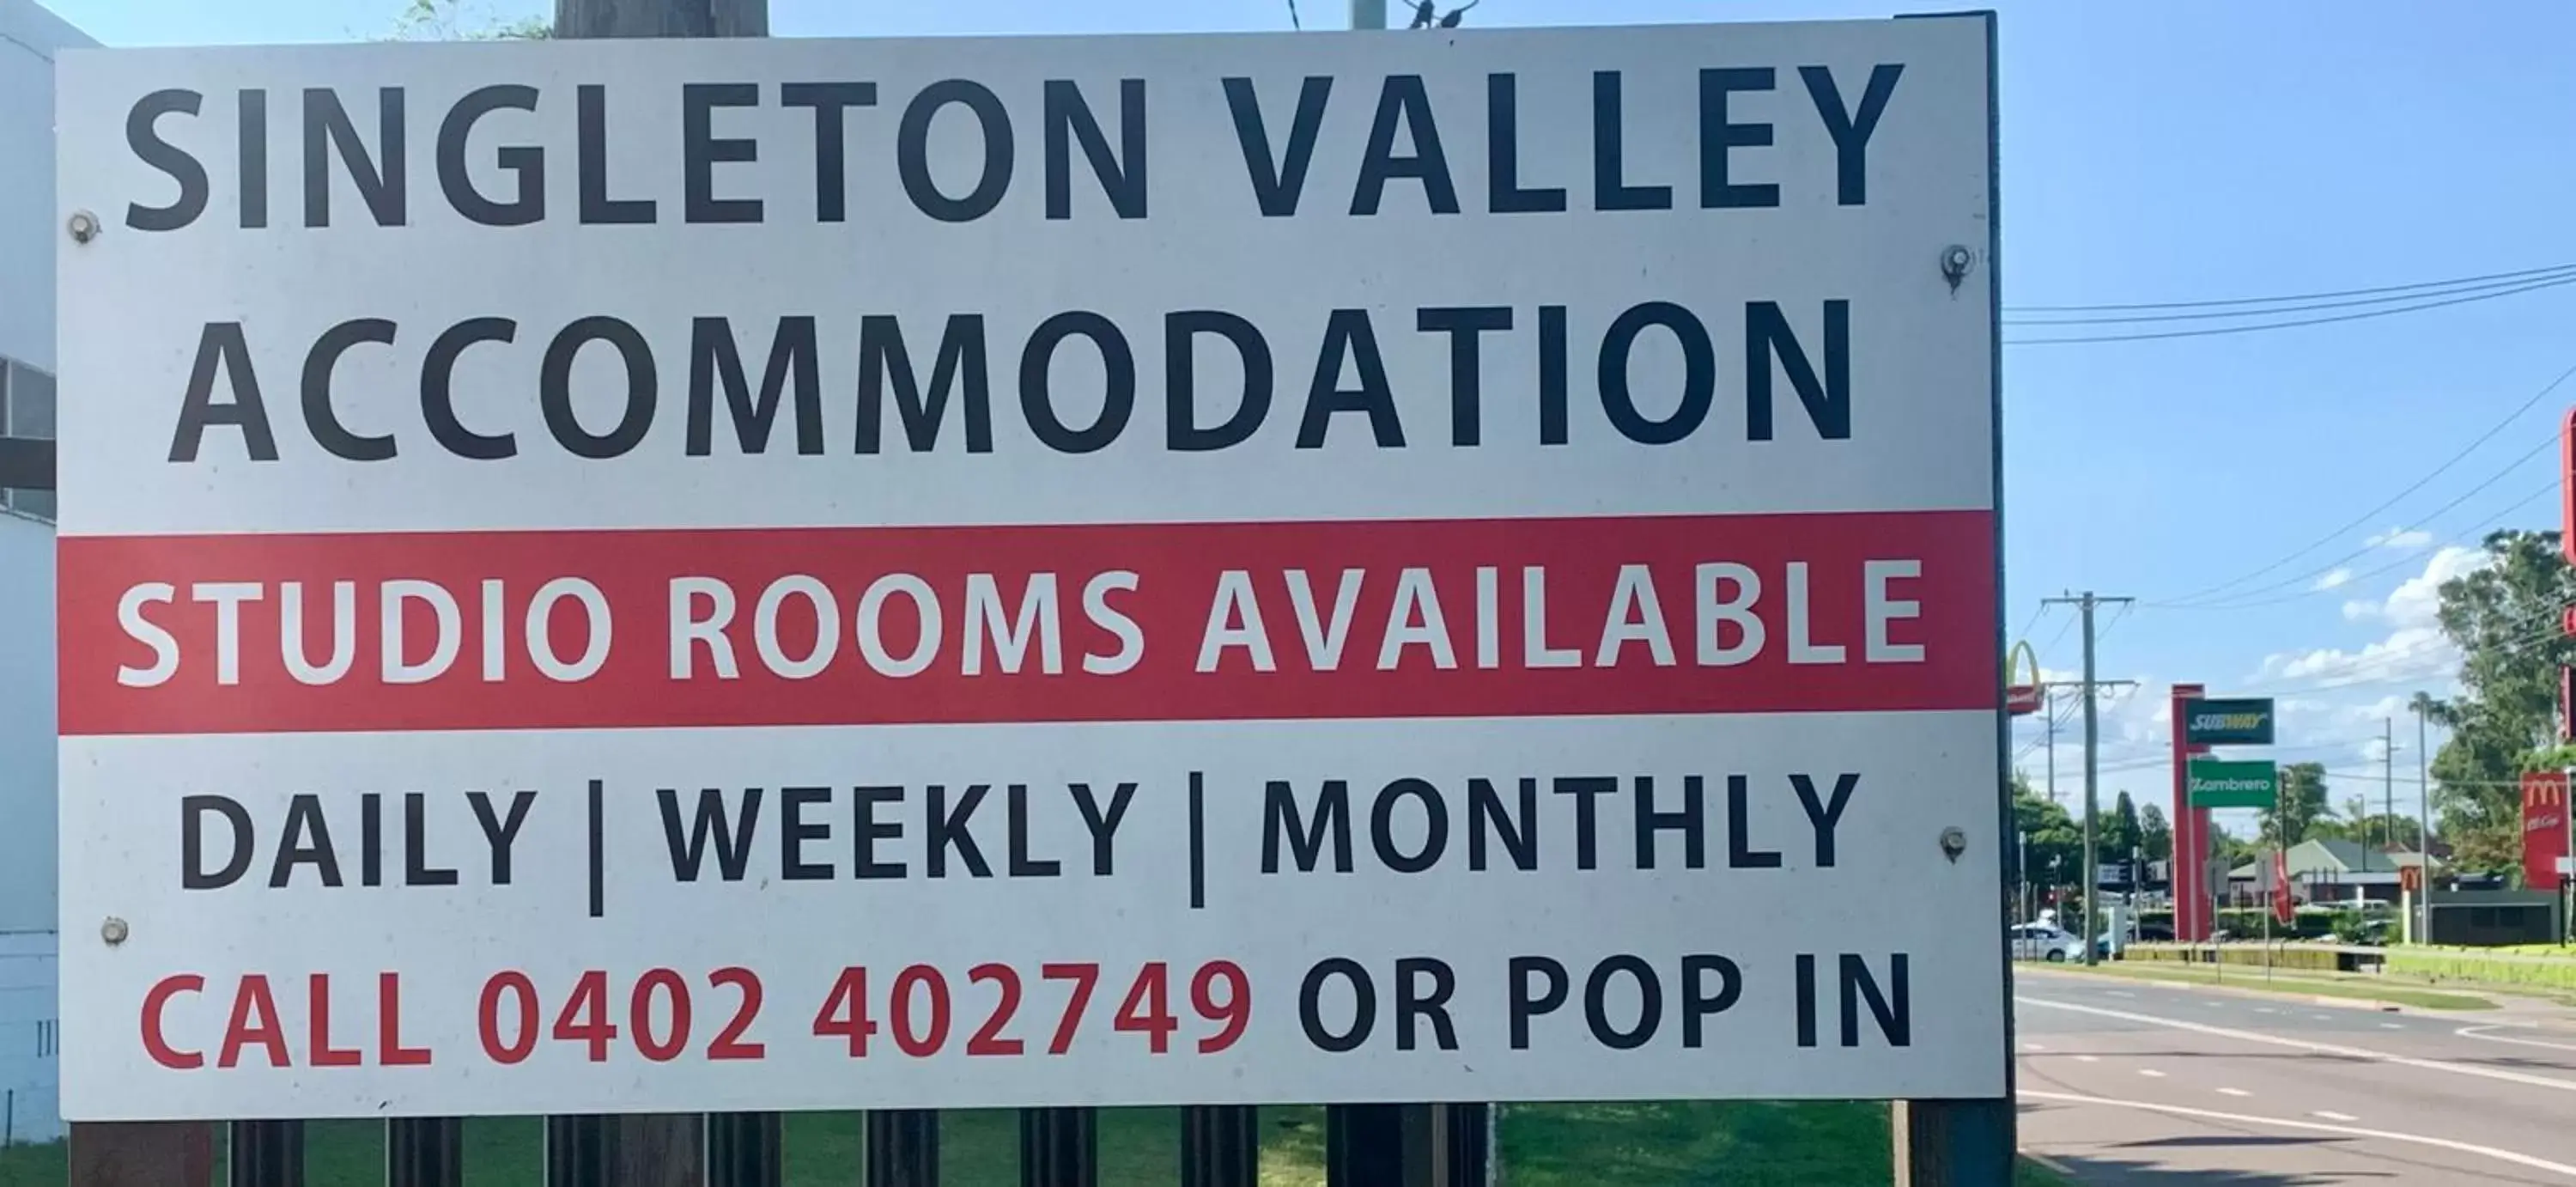 Property logo or sign in Singleton Valley Accommodation